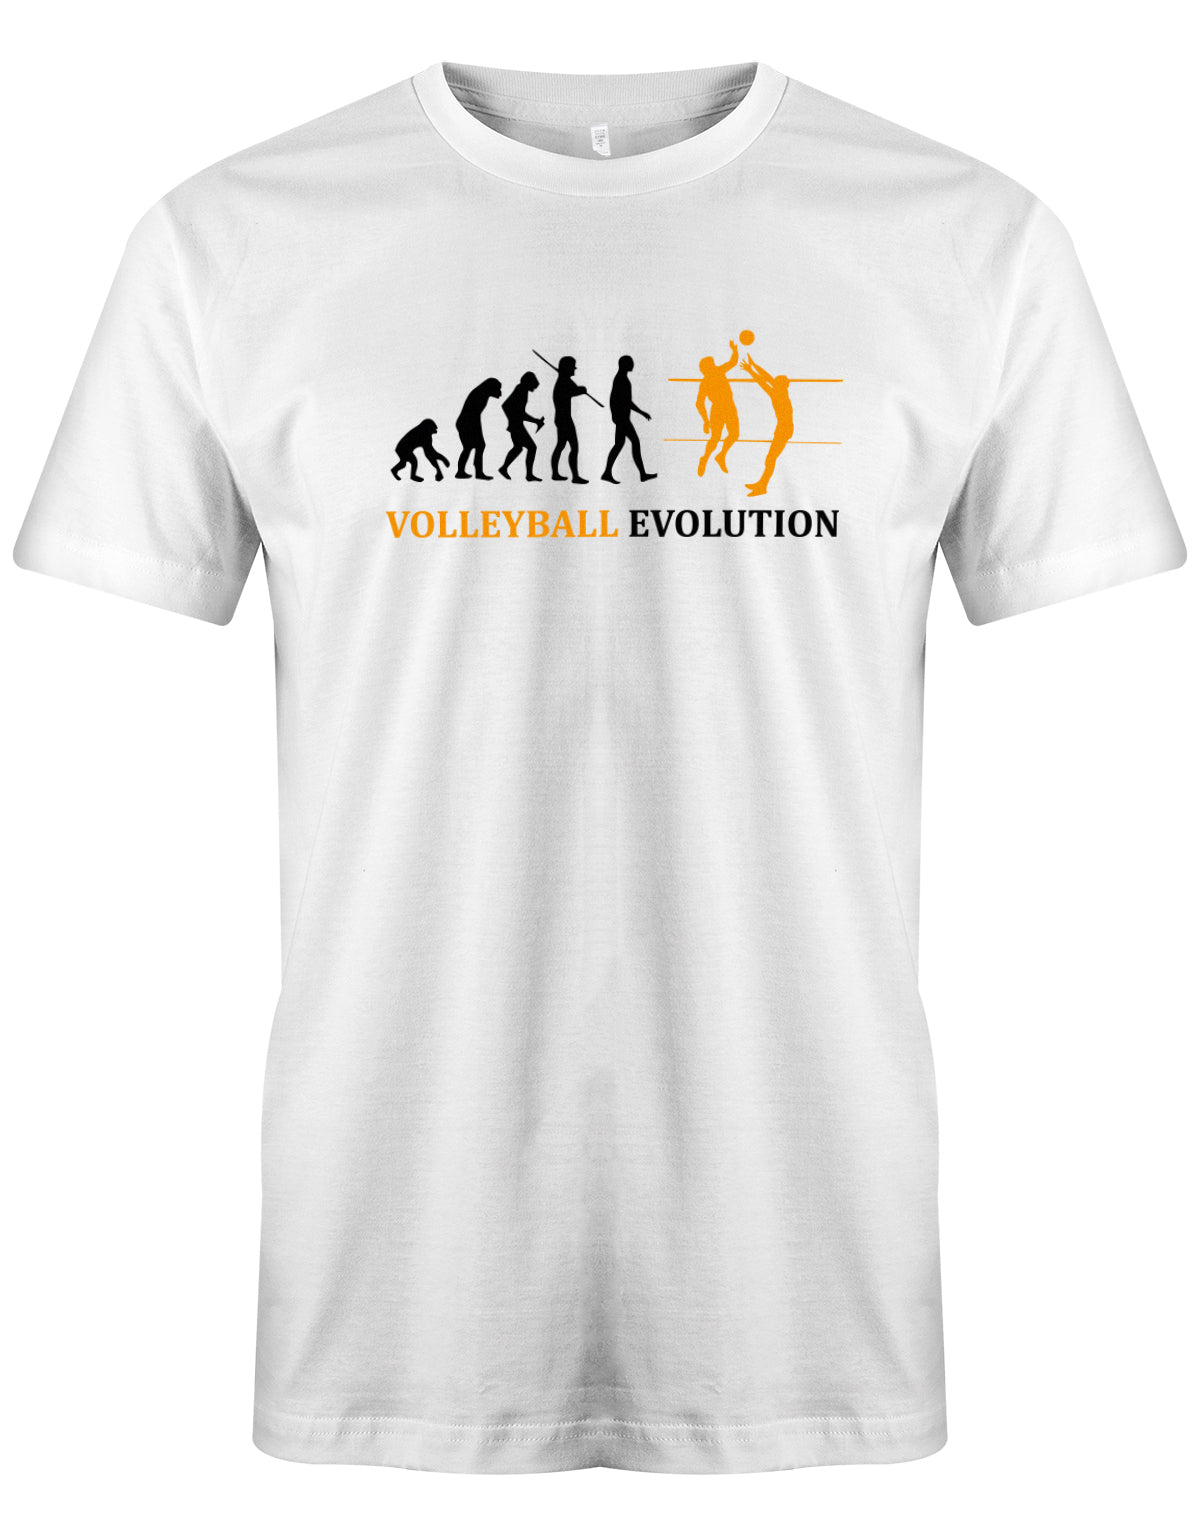 volleyball-evolution-herren-shirt-weiss